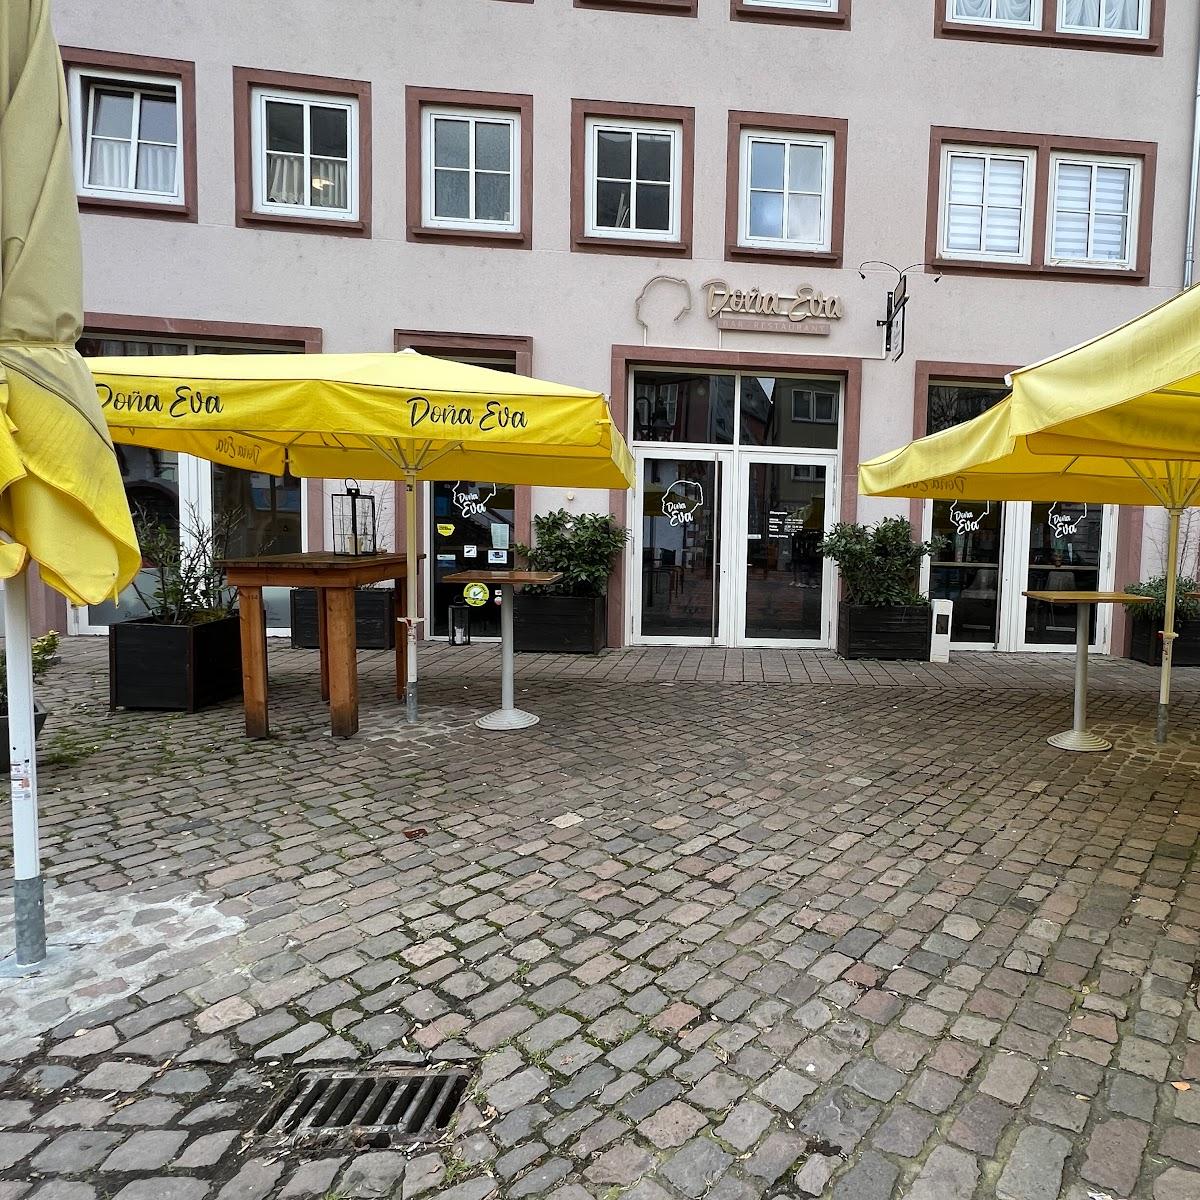 Restaurant "Dona Eva" in Hanau